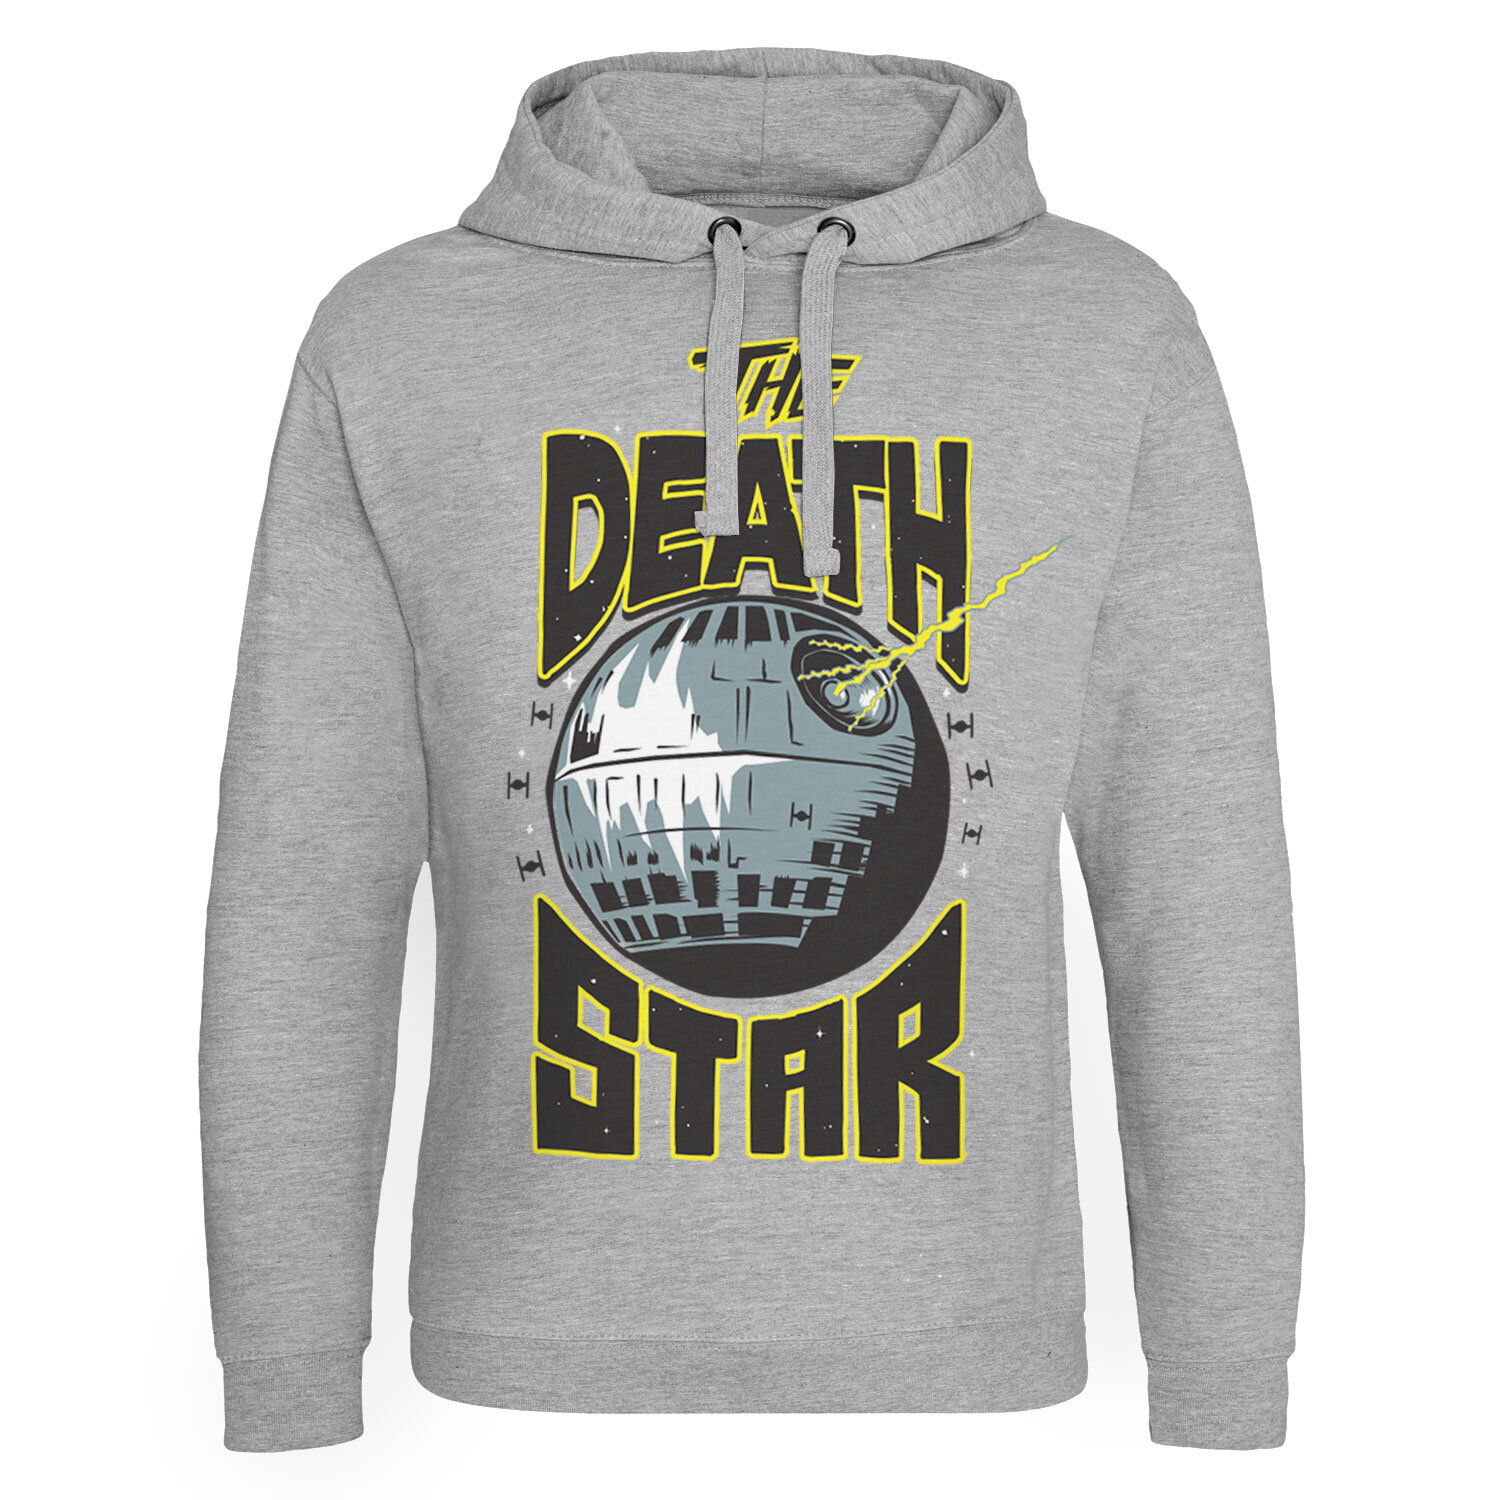 The Death Star Epic Hoodie